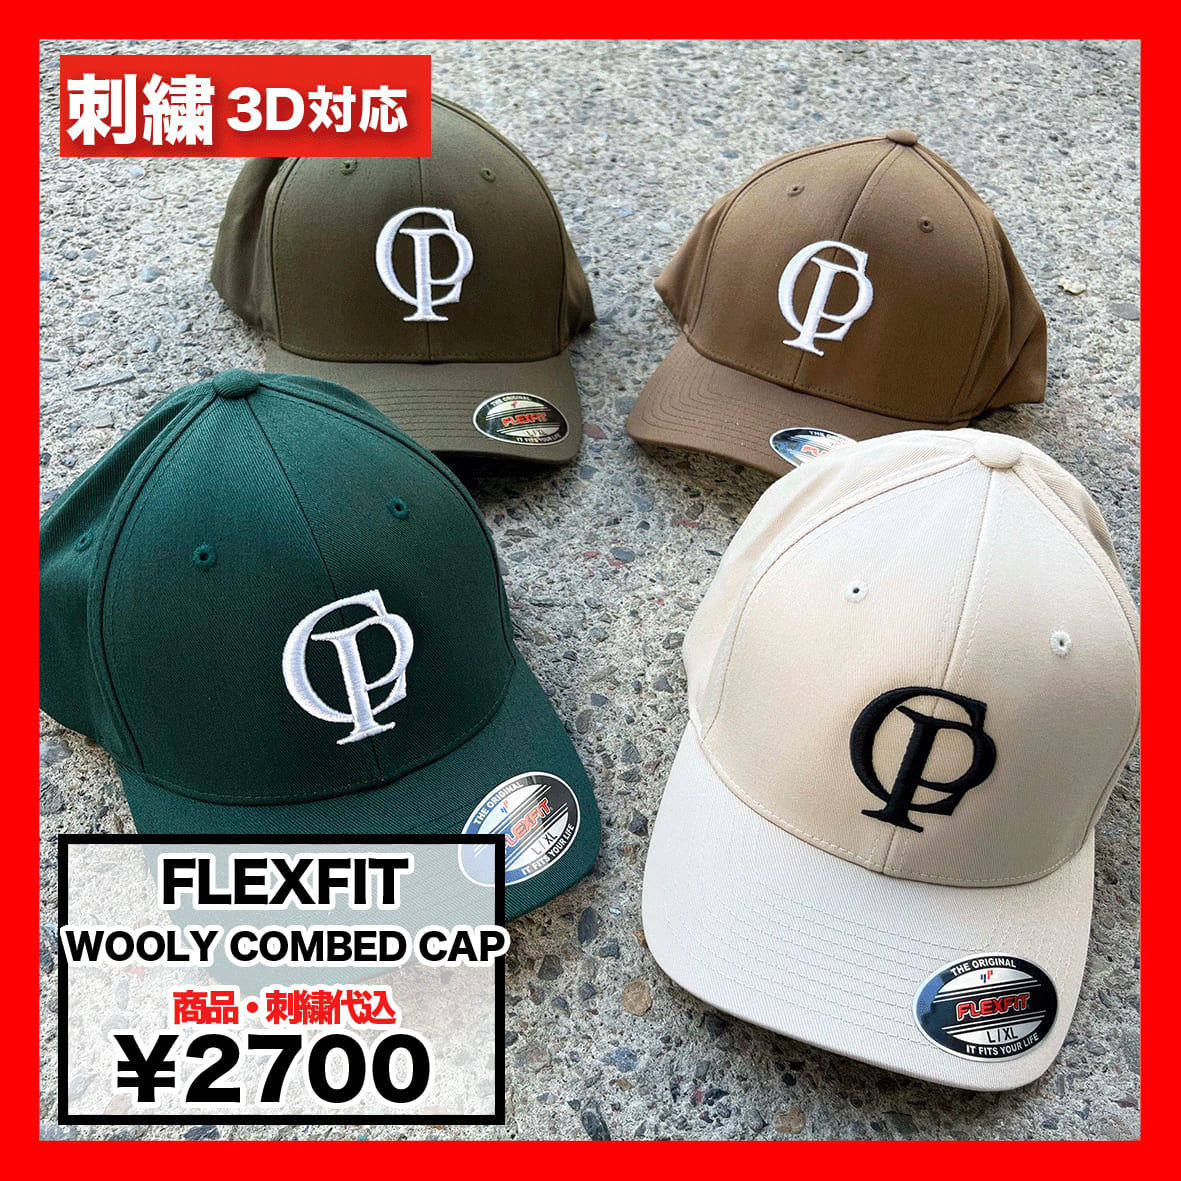 FLEXFIT フレックスフィット WOOLY COMBED CAP (品番6277)